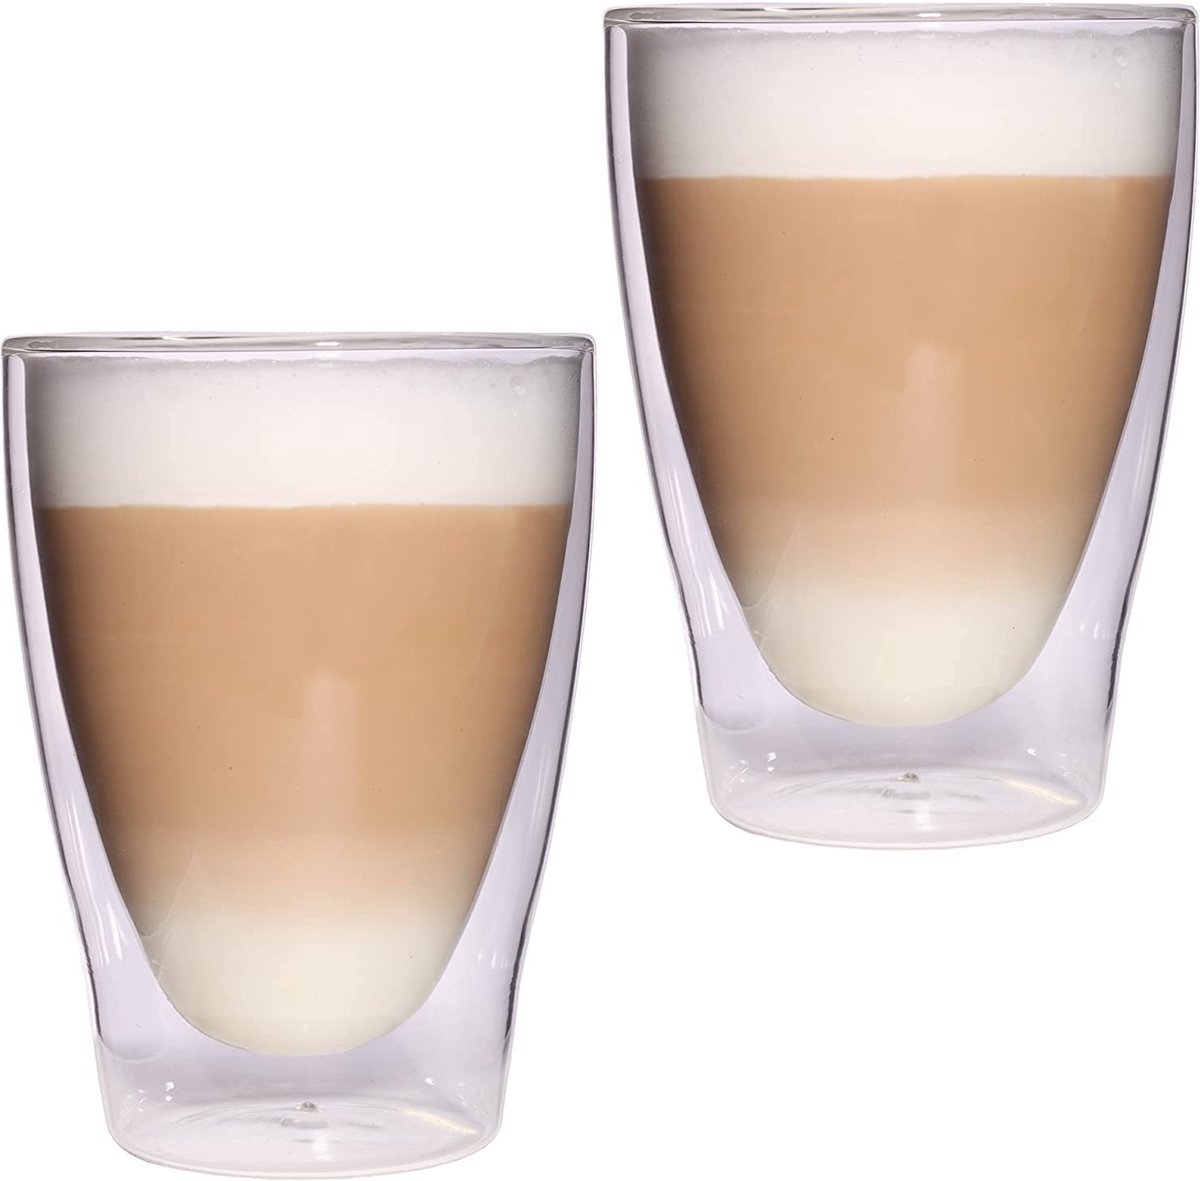 Feelino Lattechino dubbelwandige latte macchiato-glazen, set van 2, 300 ml XL thermo-glazen met zweefeffect in geschenkdoos